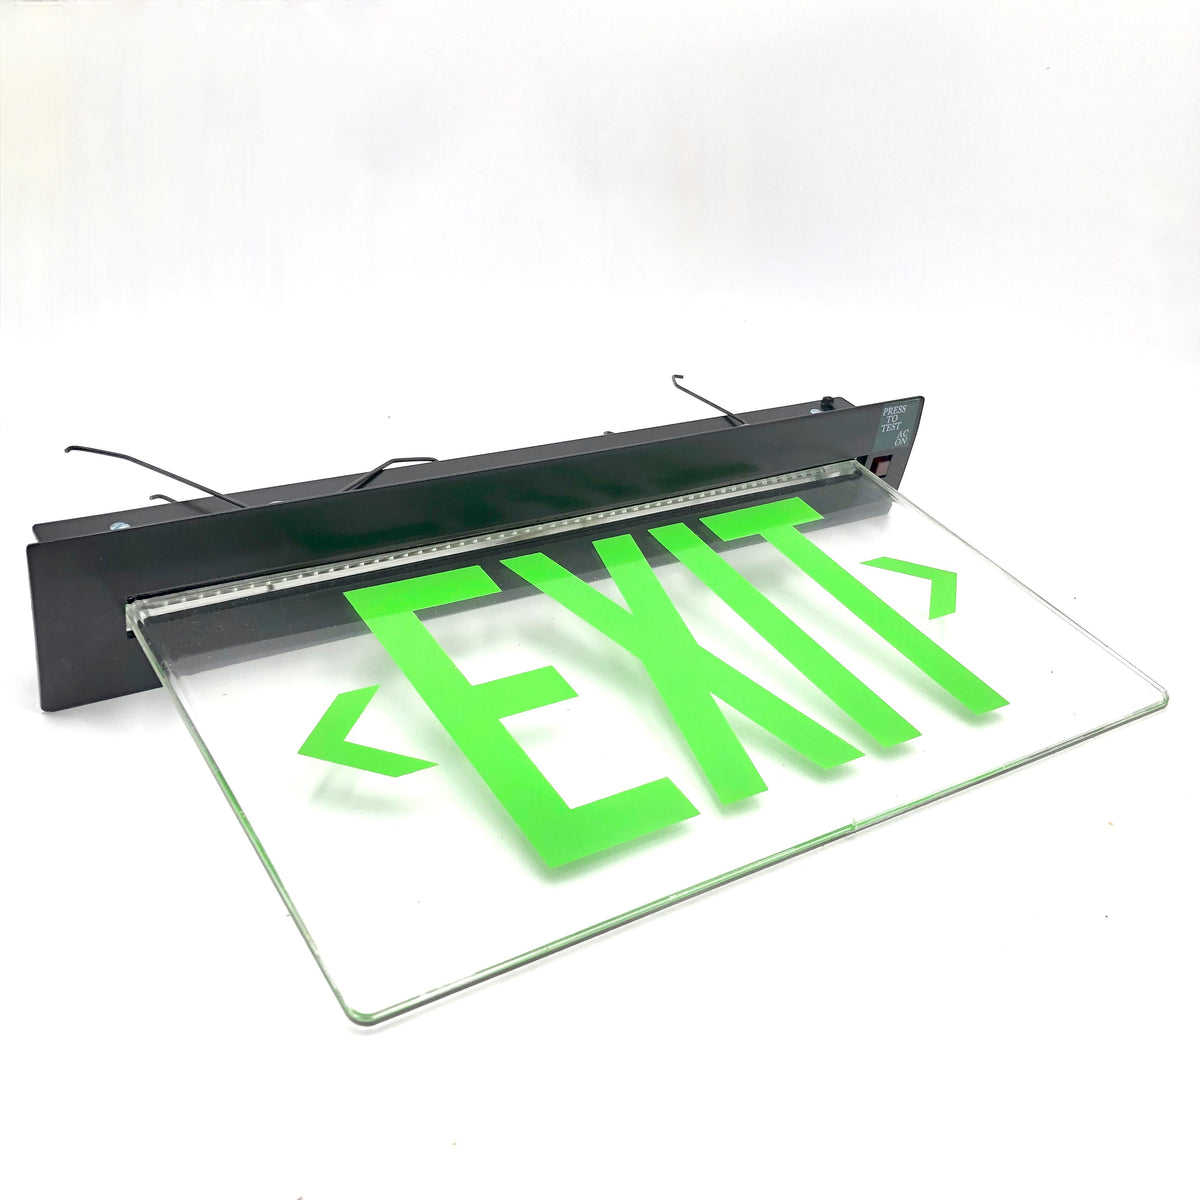 Emergency lighting - Eurolite - Cooper Lighting and Safety - LED /  surface-mounted / waterproof